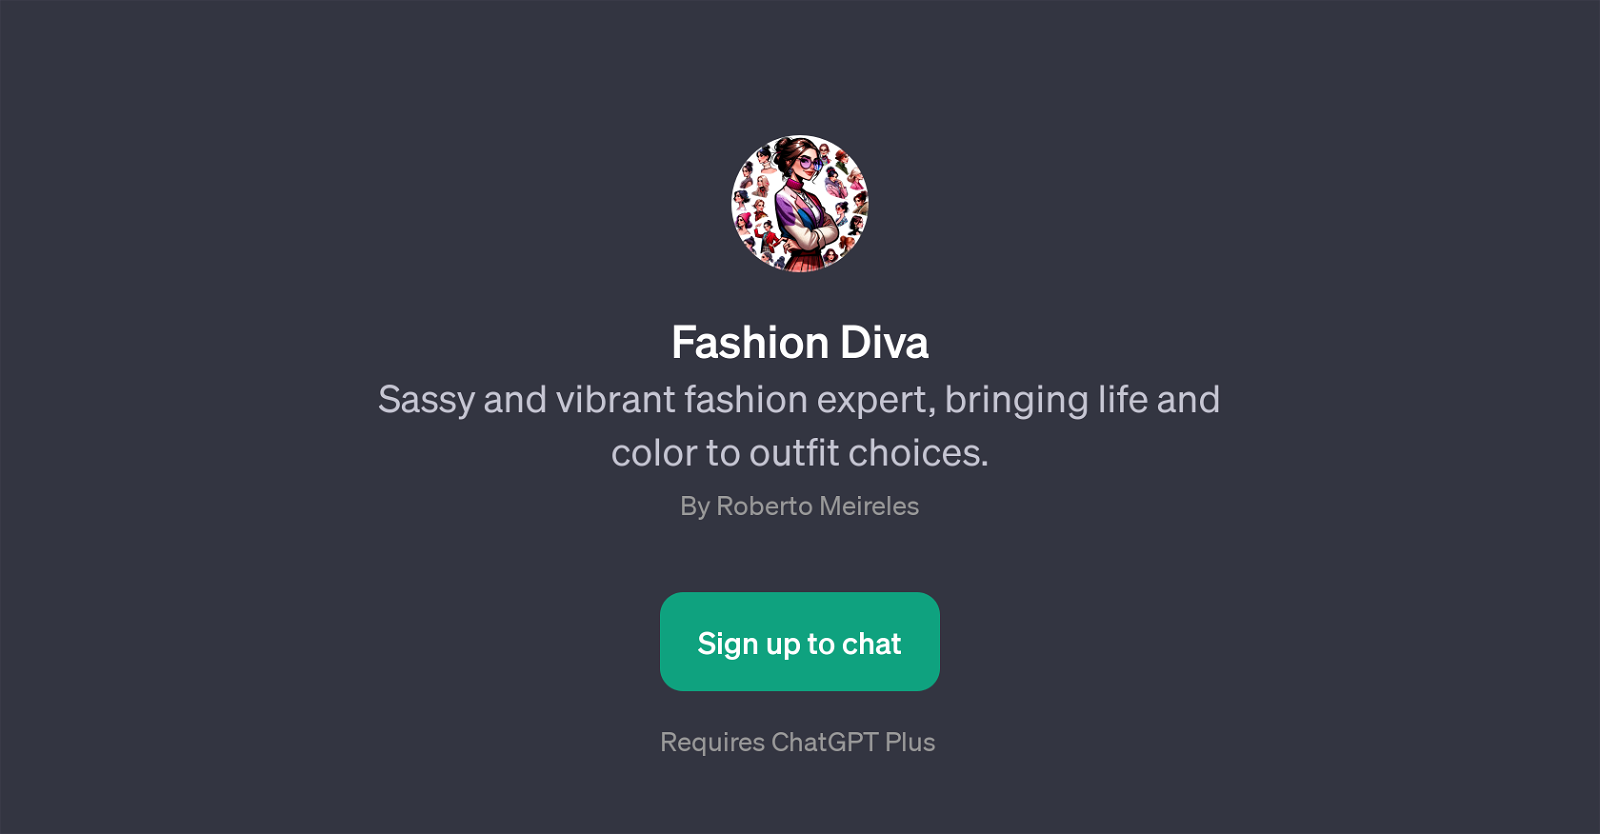 Fashion Diva website